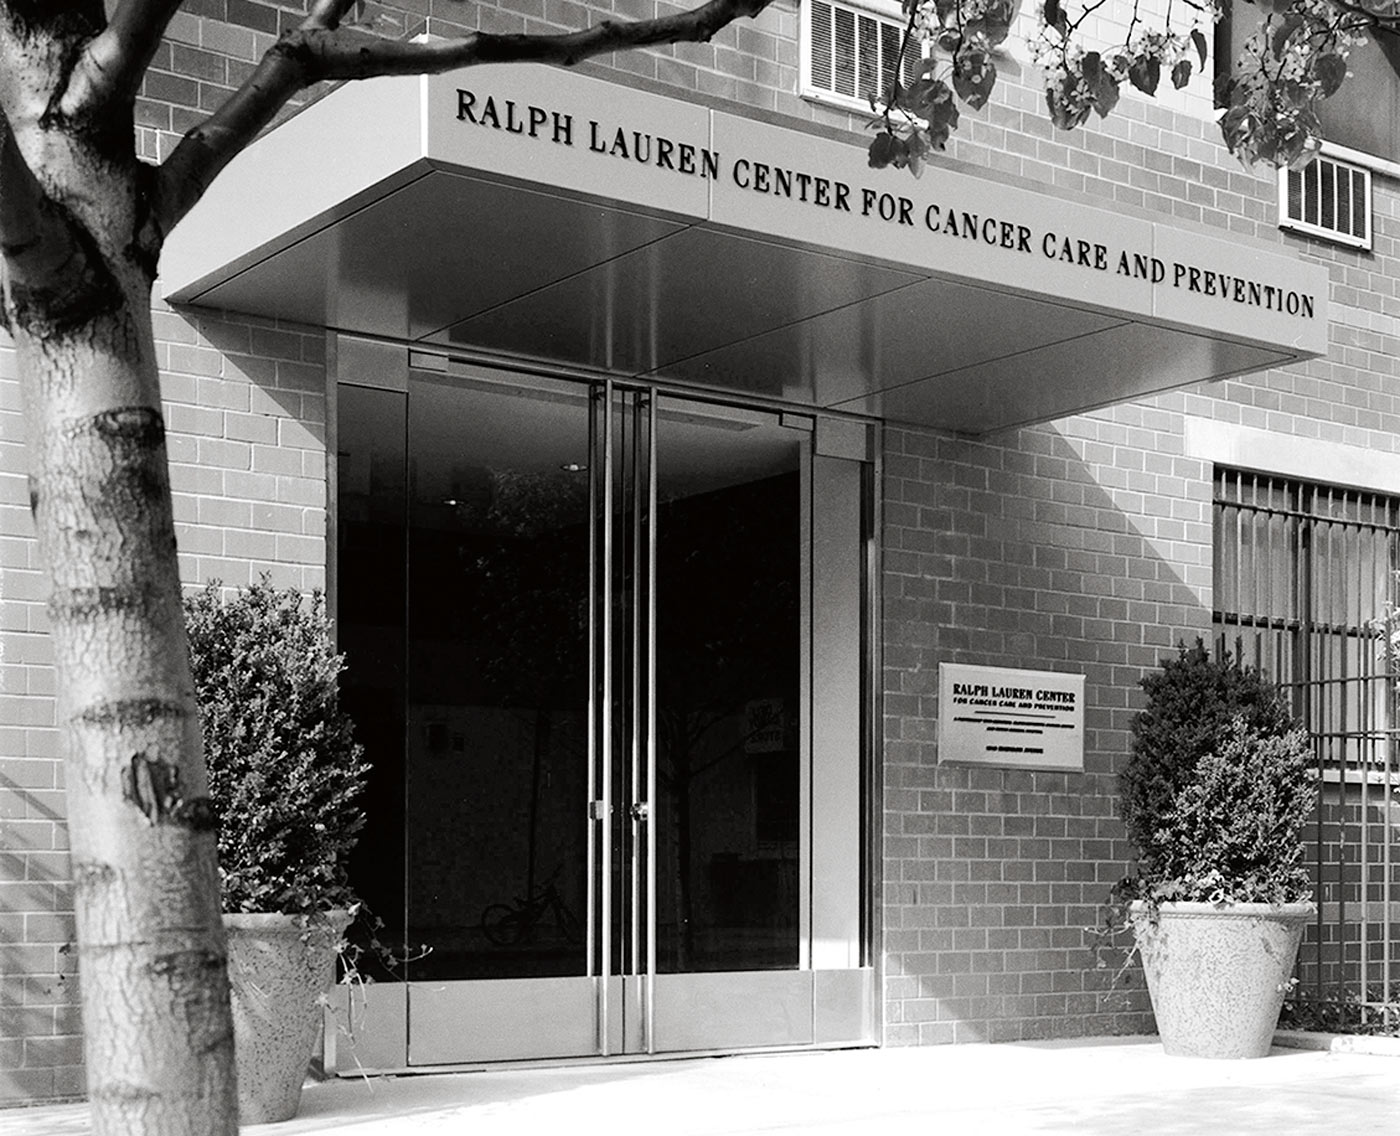  The Ralph Lauren Center for Cancer Care in Harlem, New York